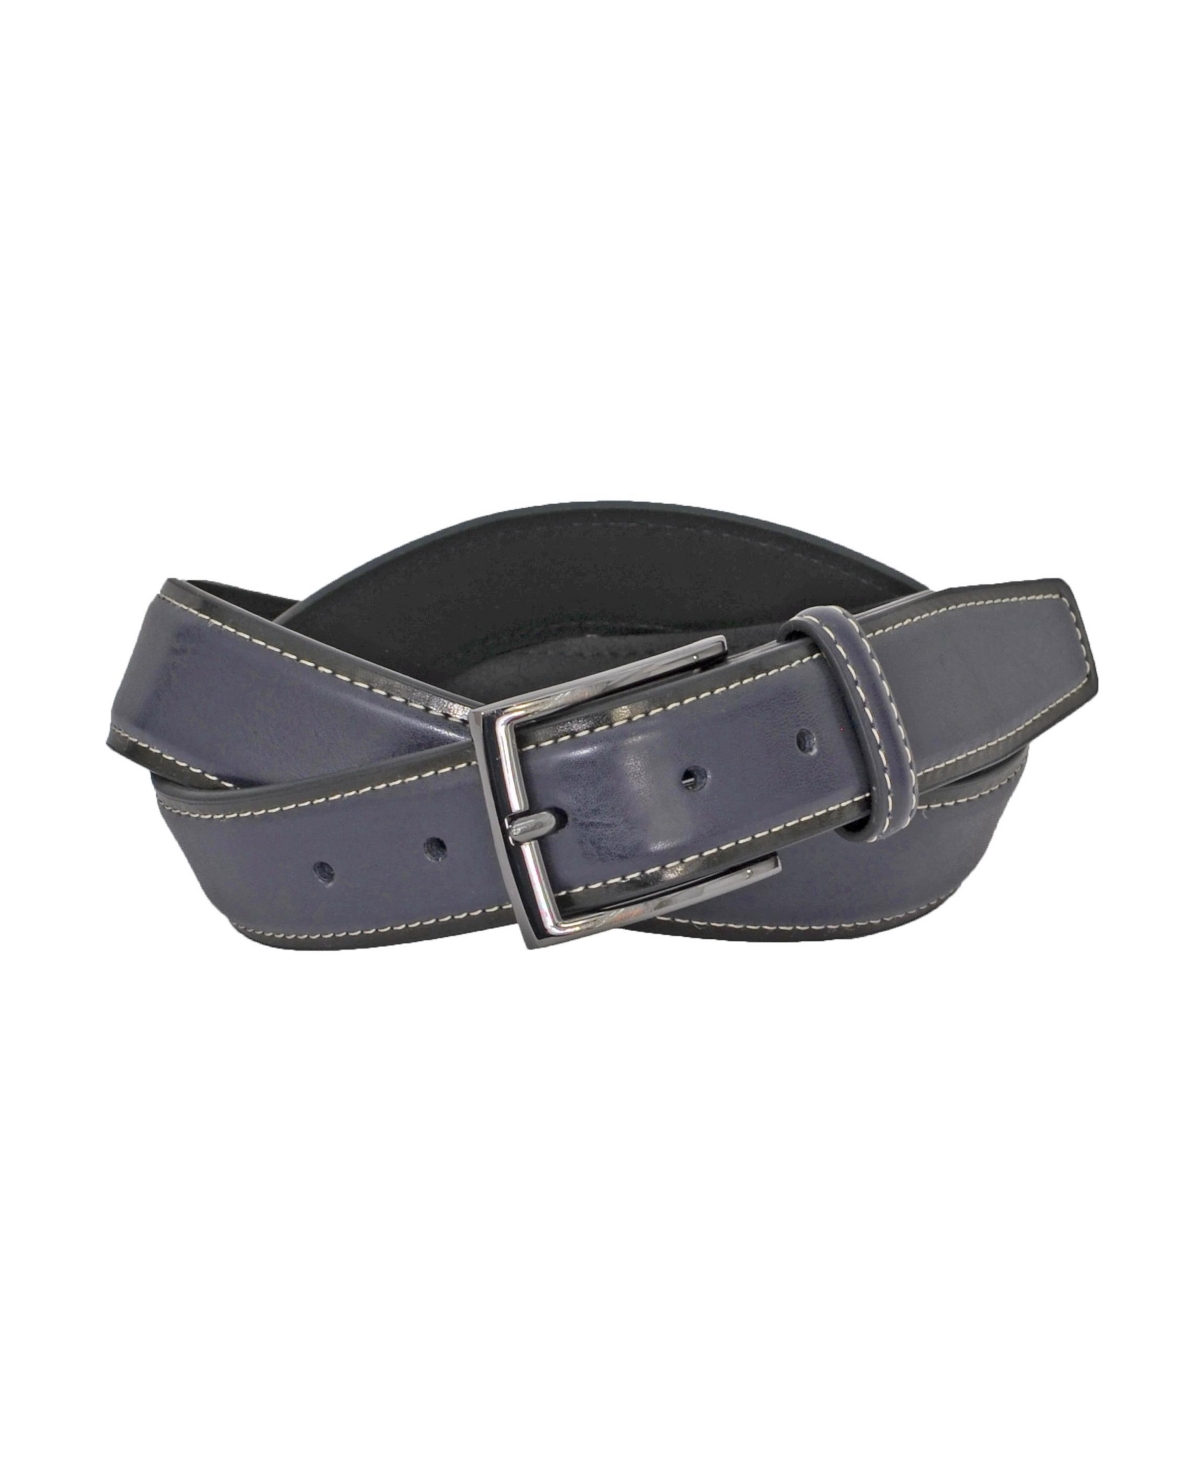 Men's Split Leather Non-Reversible Dress Casual Belt - Charcoal